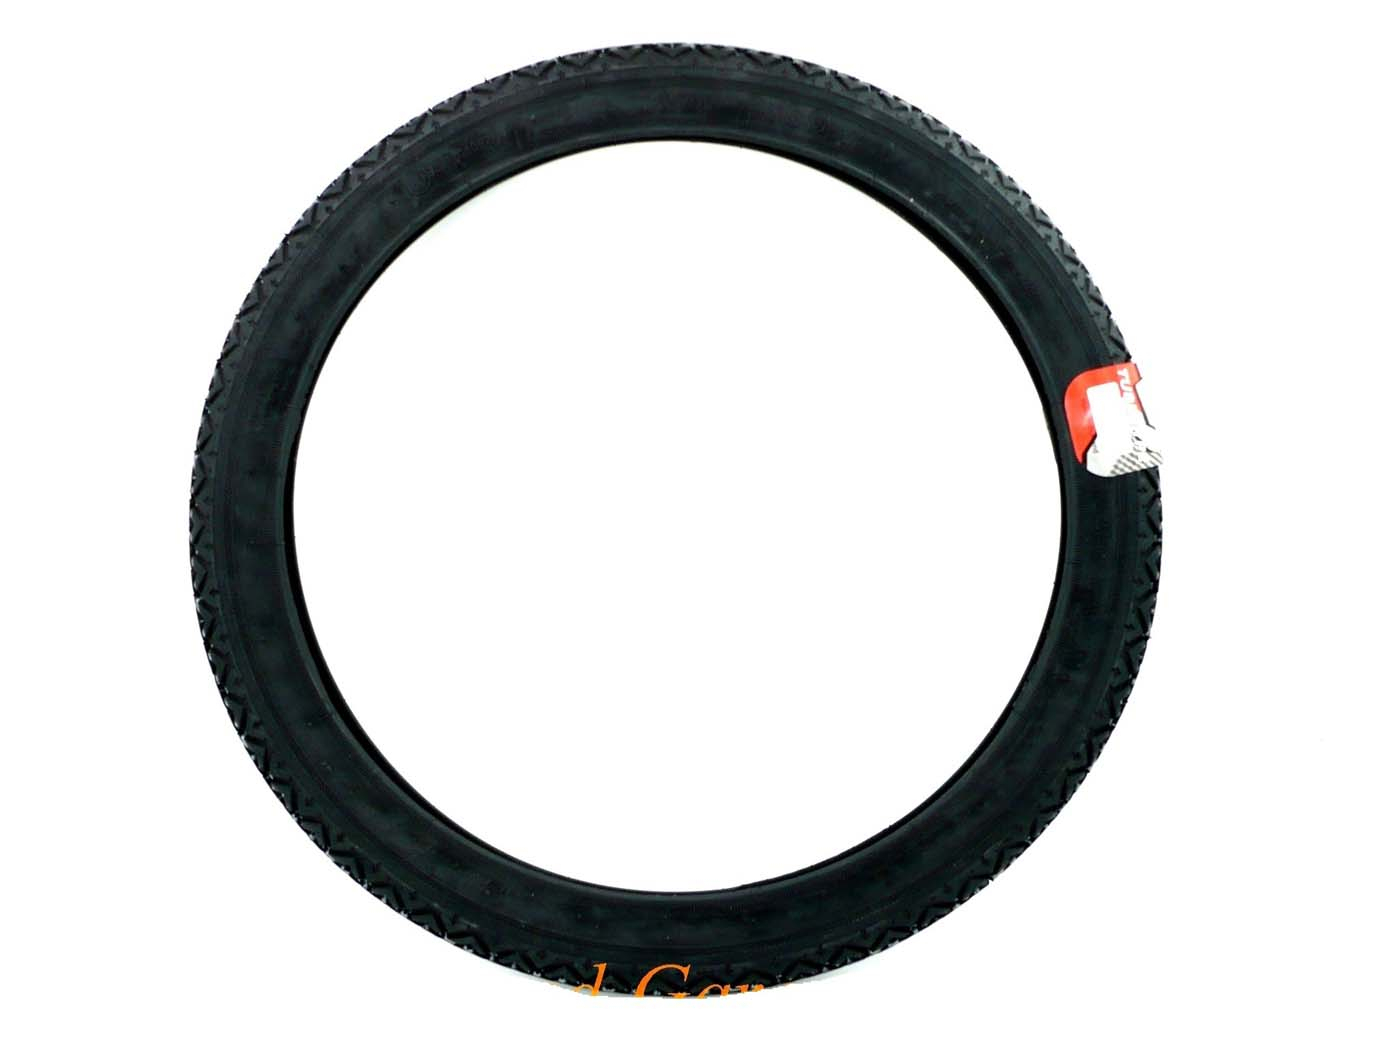 Tires Vee Rubber 2.00x16 Inch (1 Piece) For Hercules M Prima, Simson, Puch Maxi, Kreidler, Zündapp